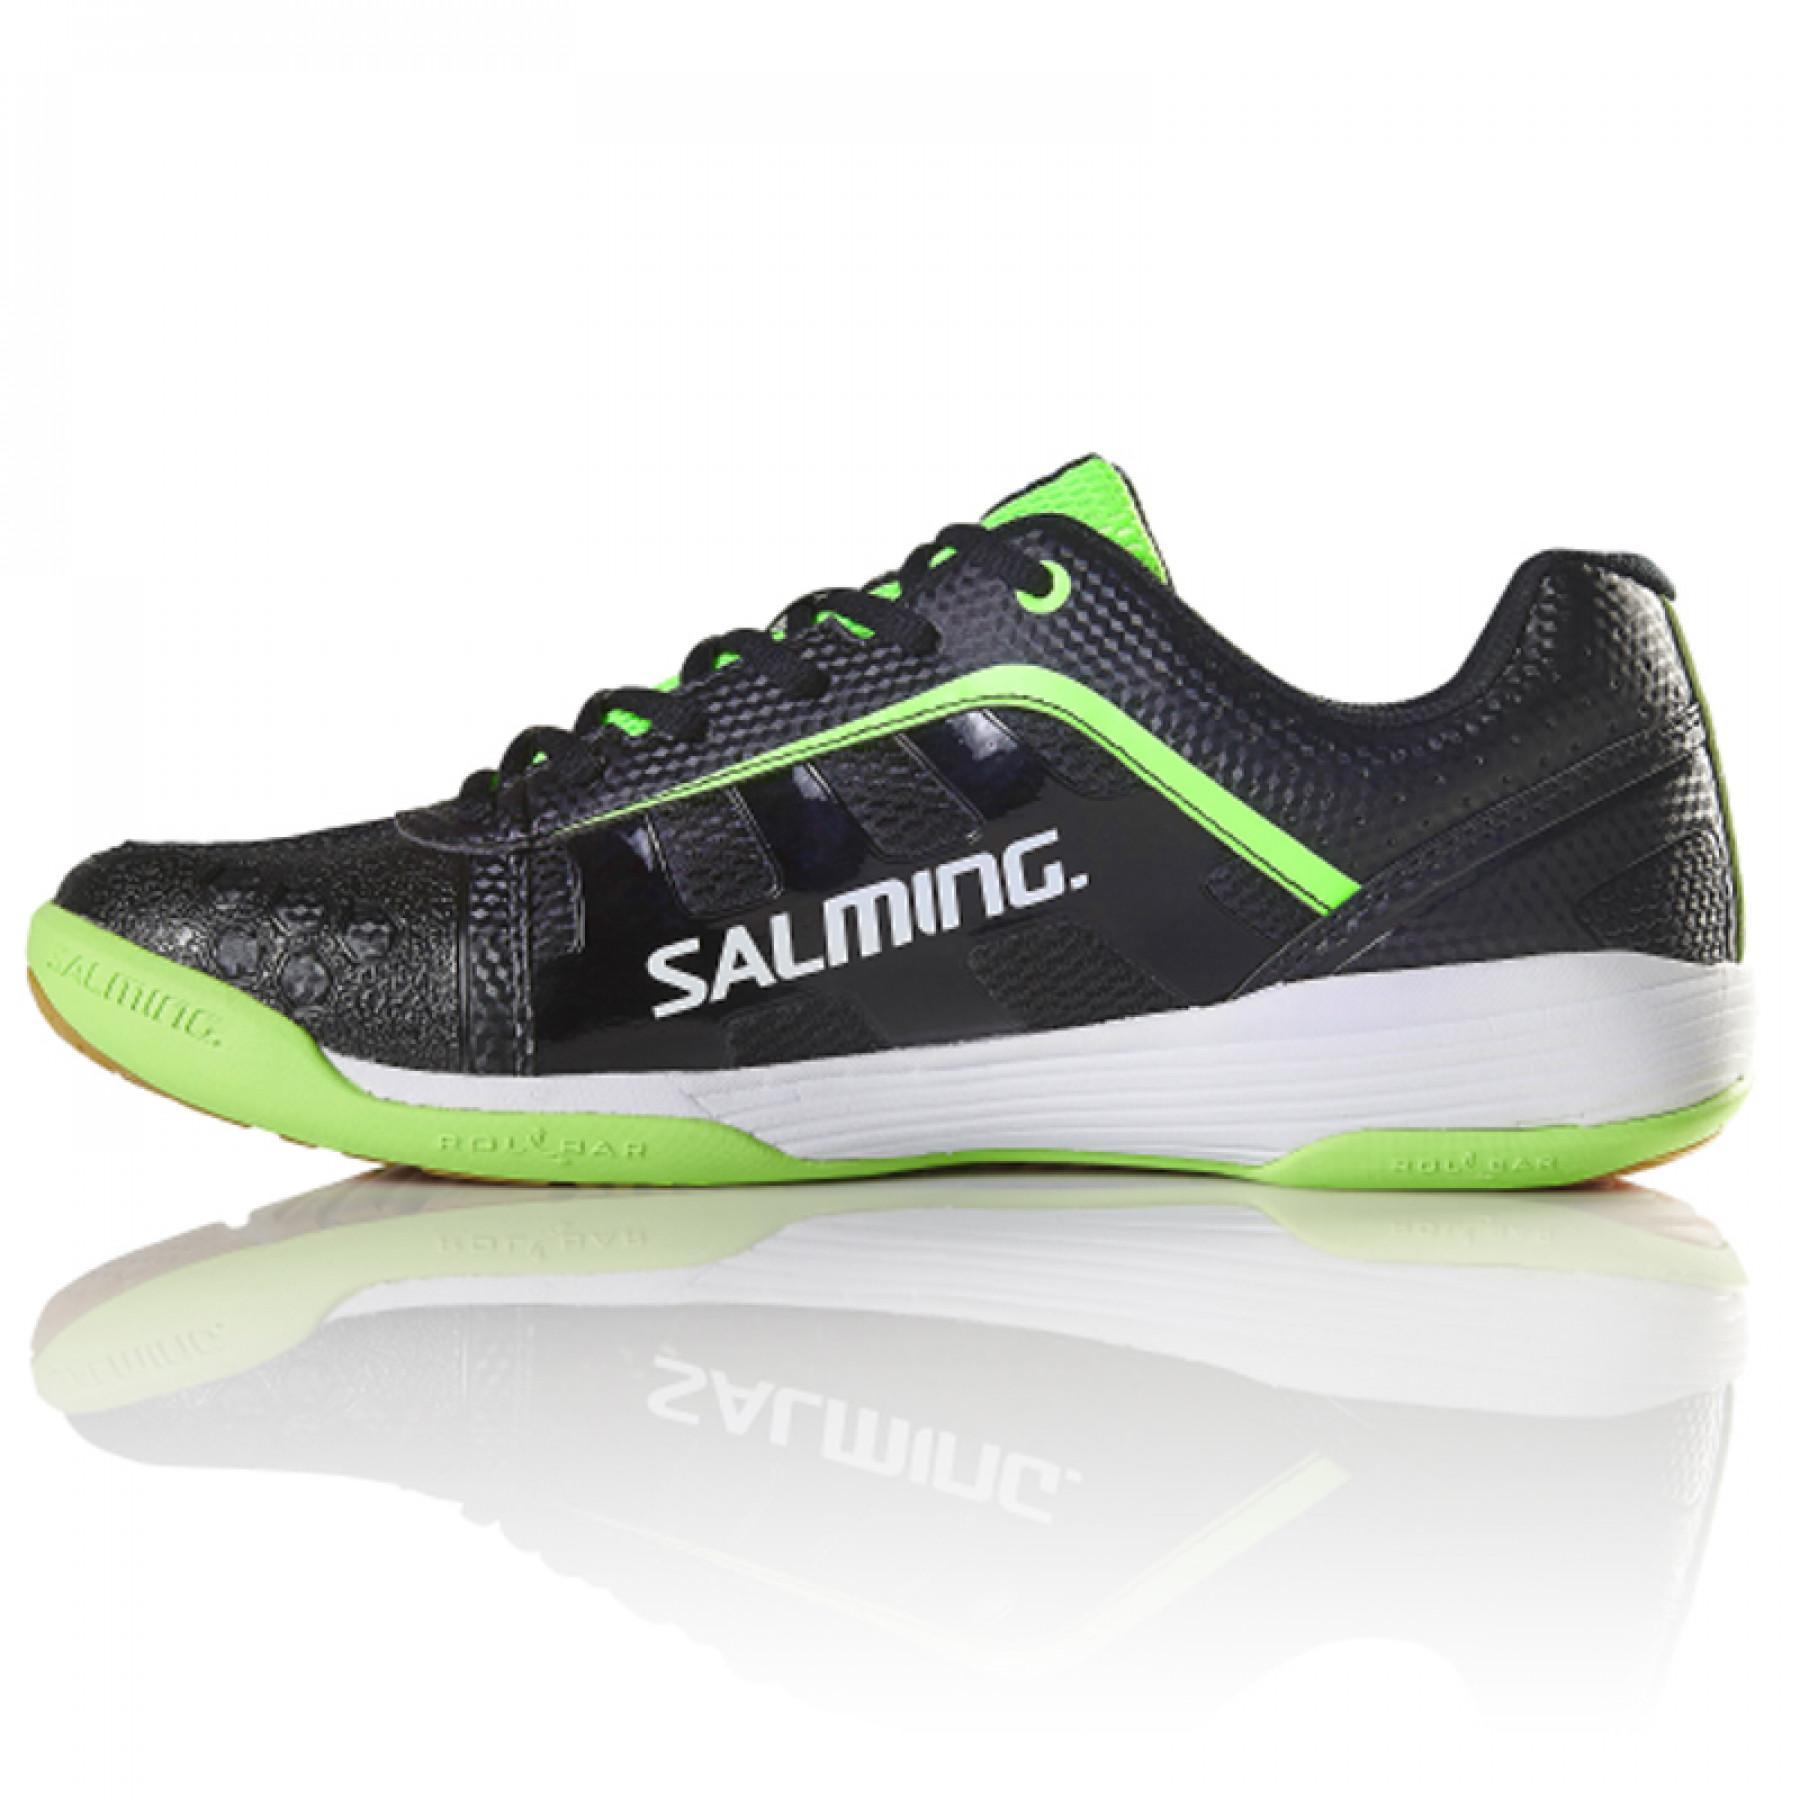 Zapatos Salming Adder Men noir/vert